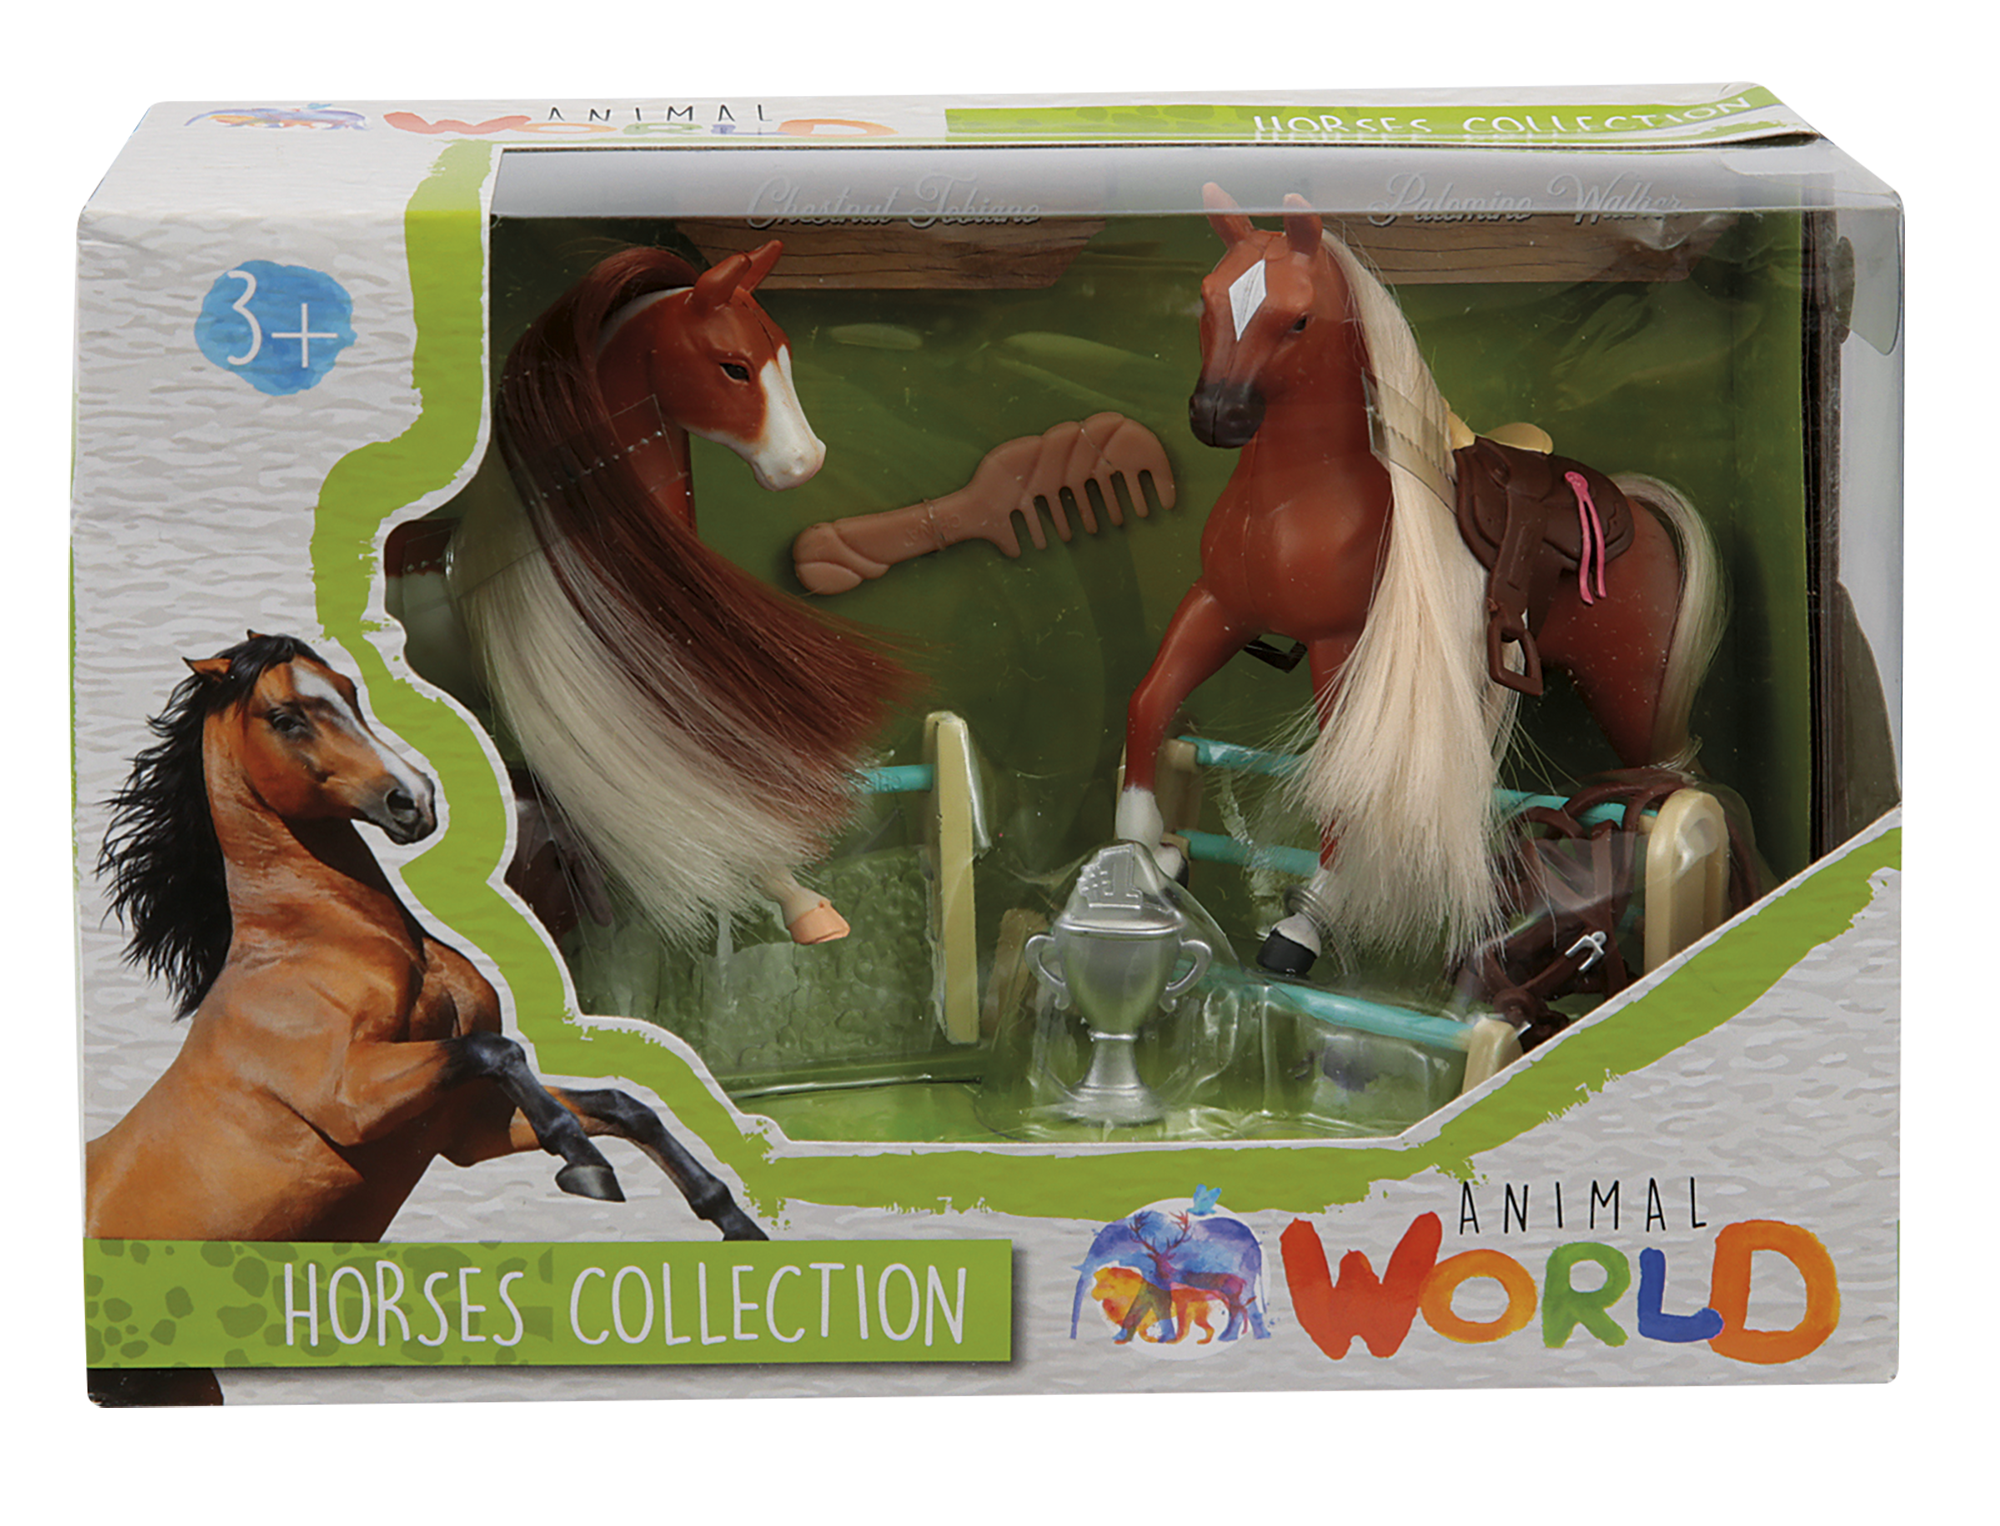 Animal World - Horses collection - Animal World